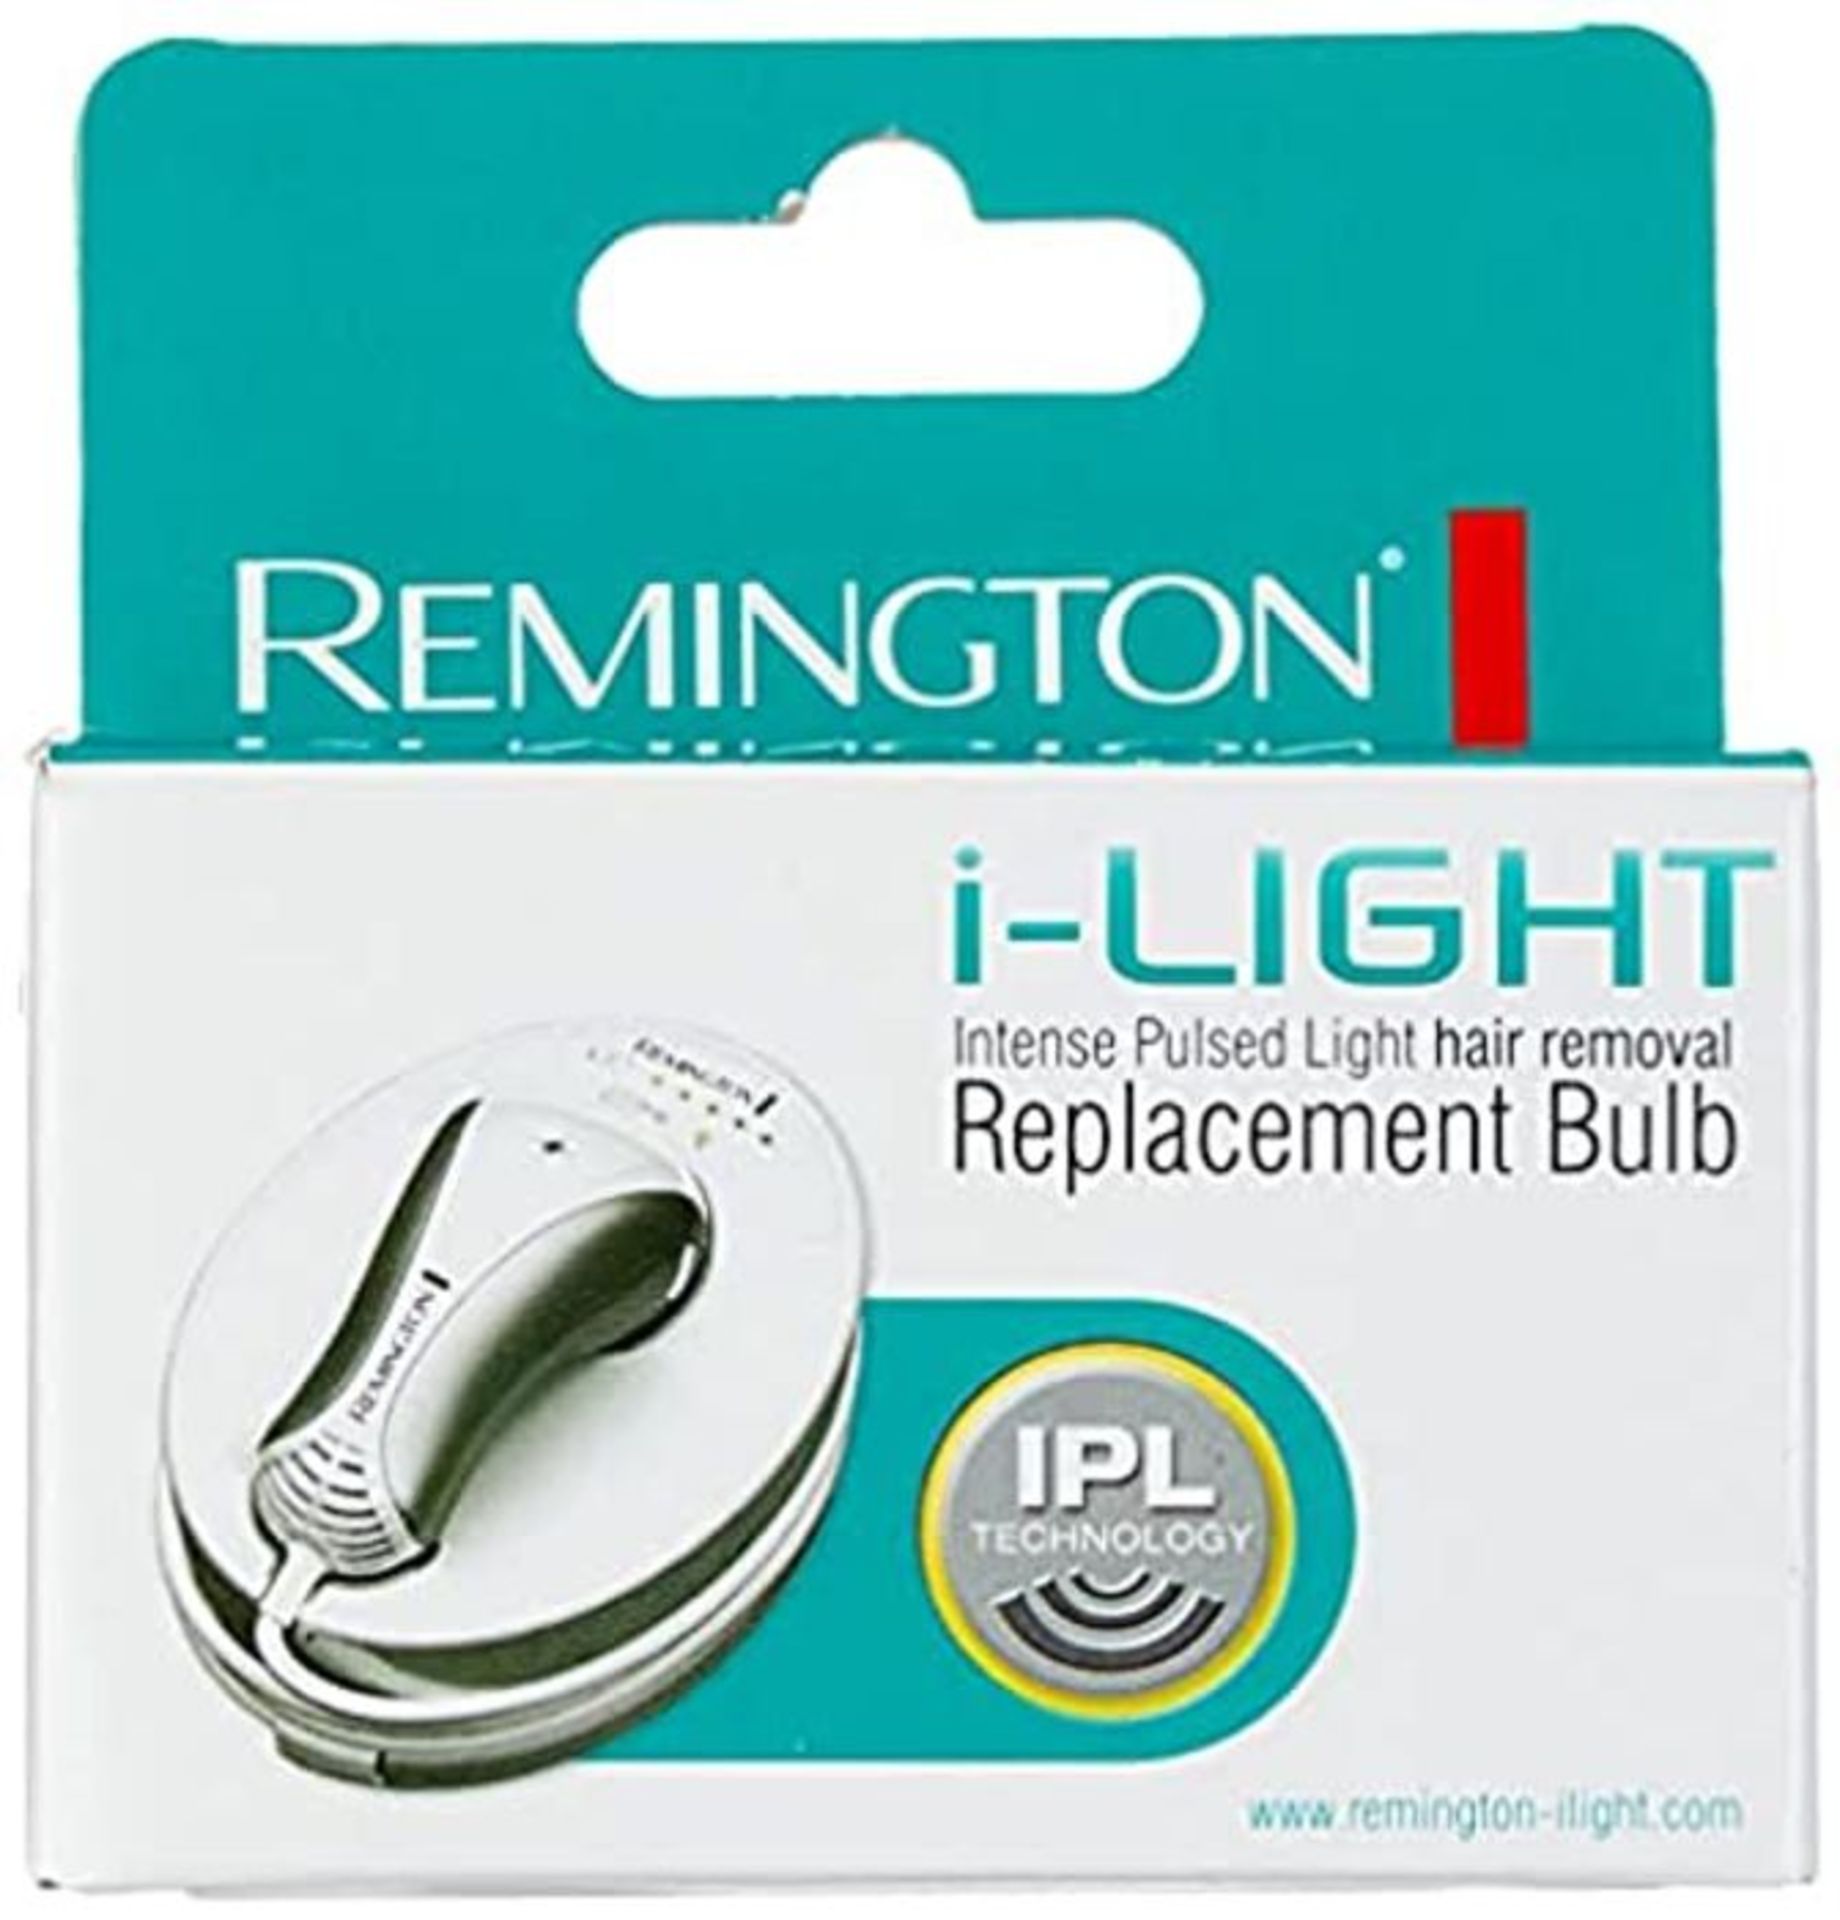 Remington SPIPL i-Light Replacement Bulb